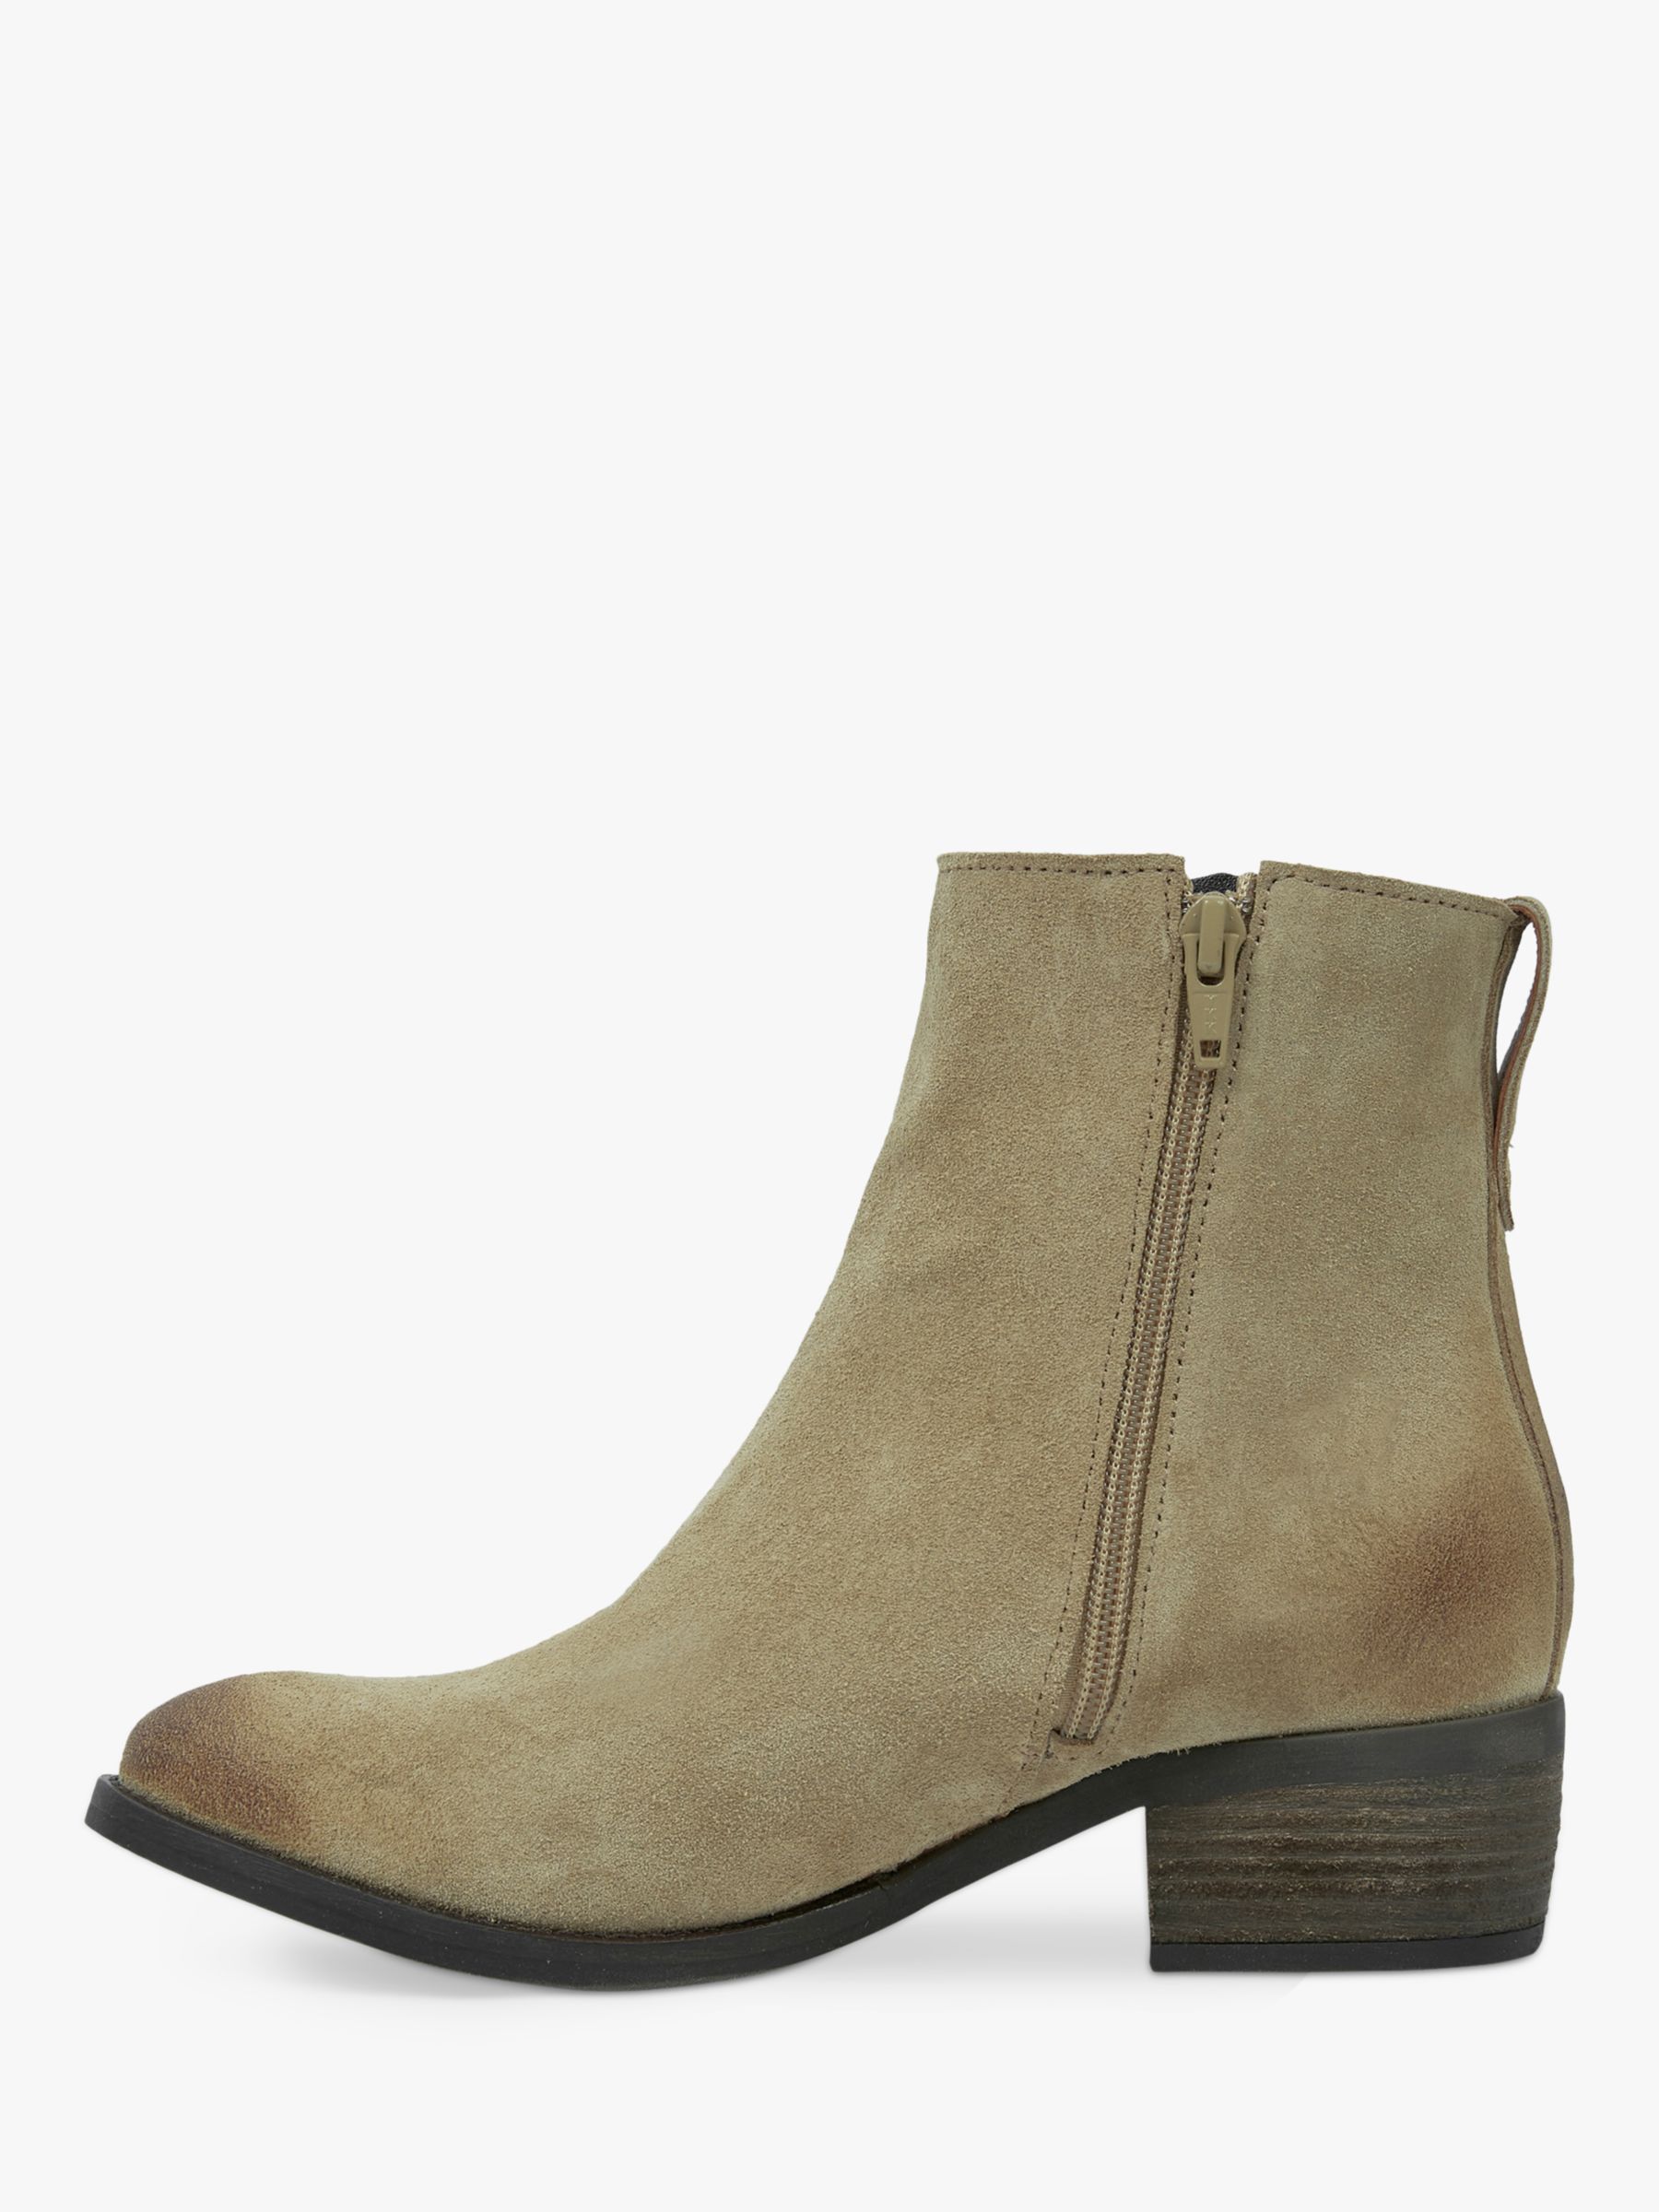 Celtic & Co. Western Suede Ankle Boots, Camel, EU39